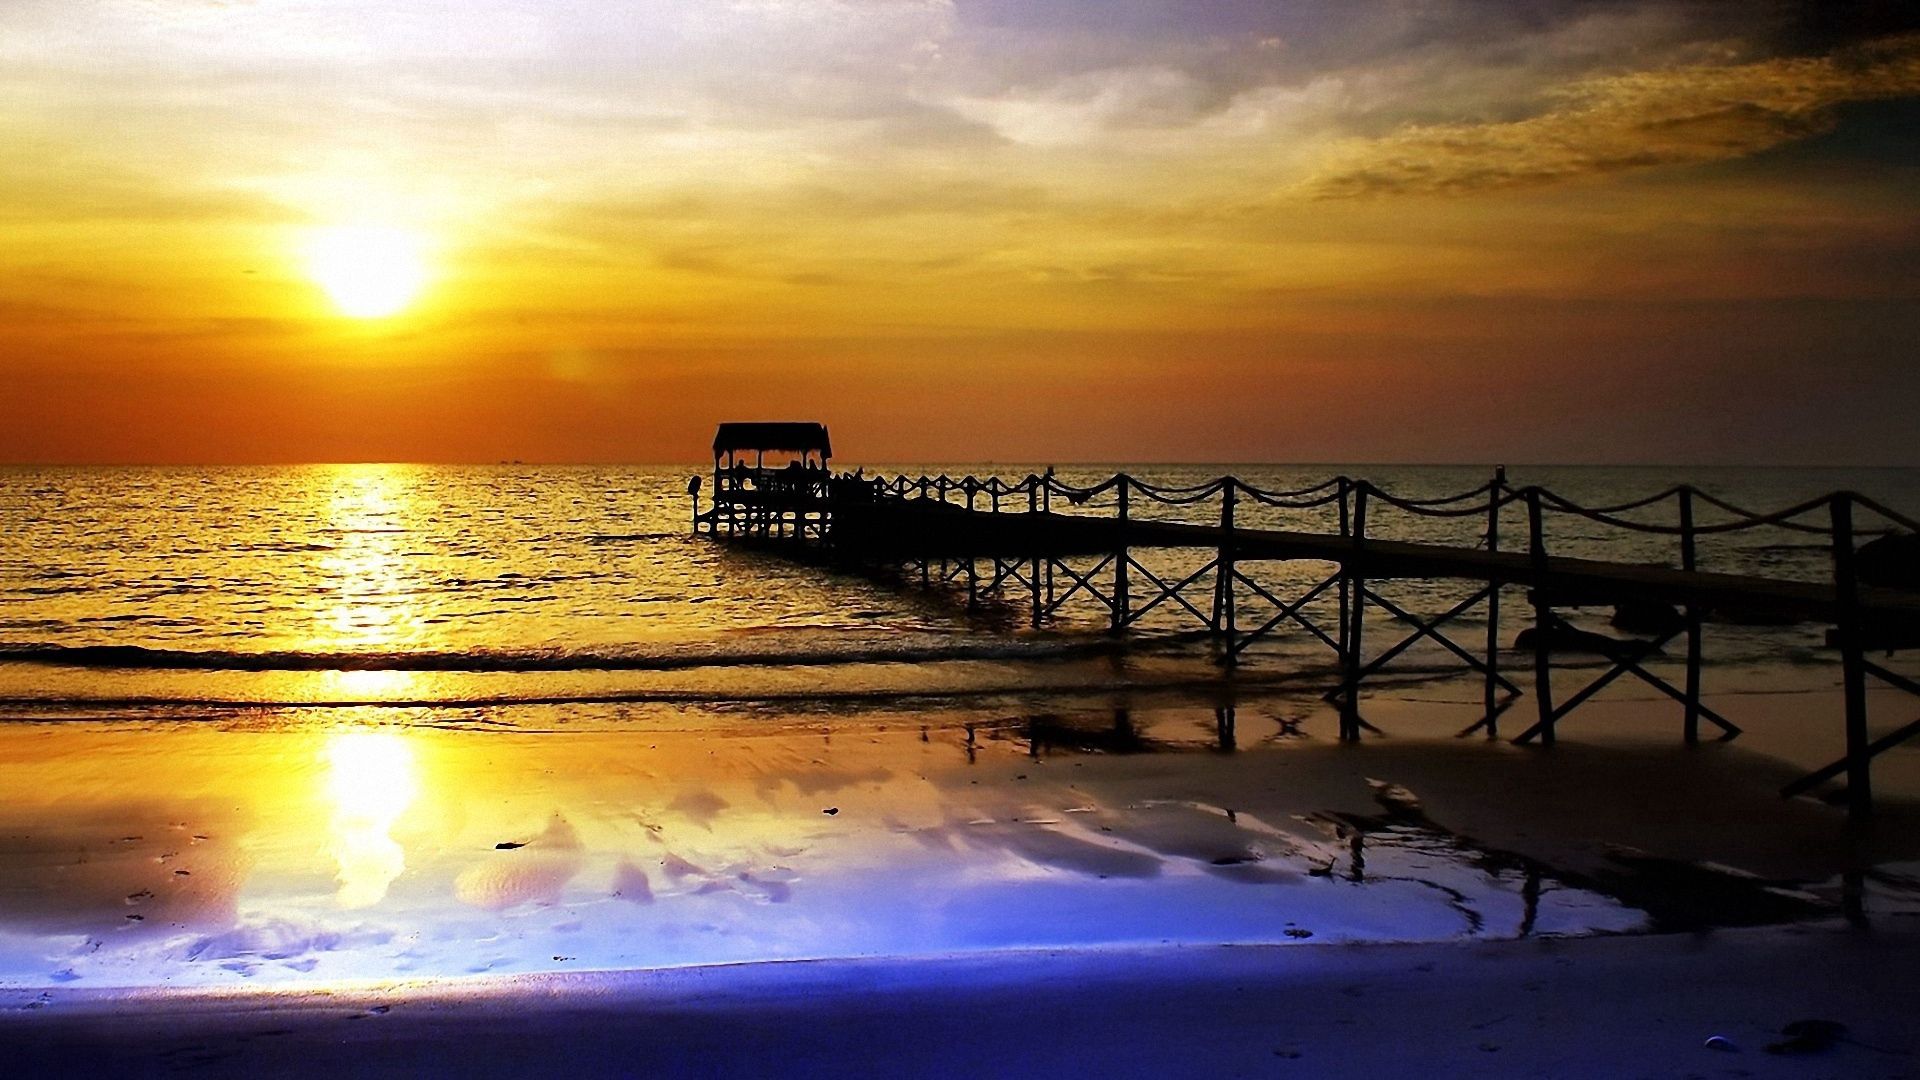 nature, sunset, sea, orange, reflection, pier, evening, fencing, enclosure, calm